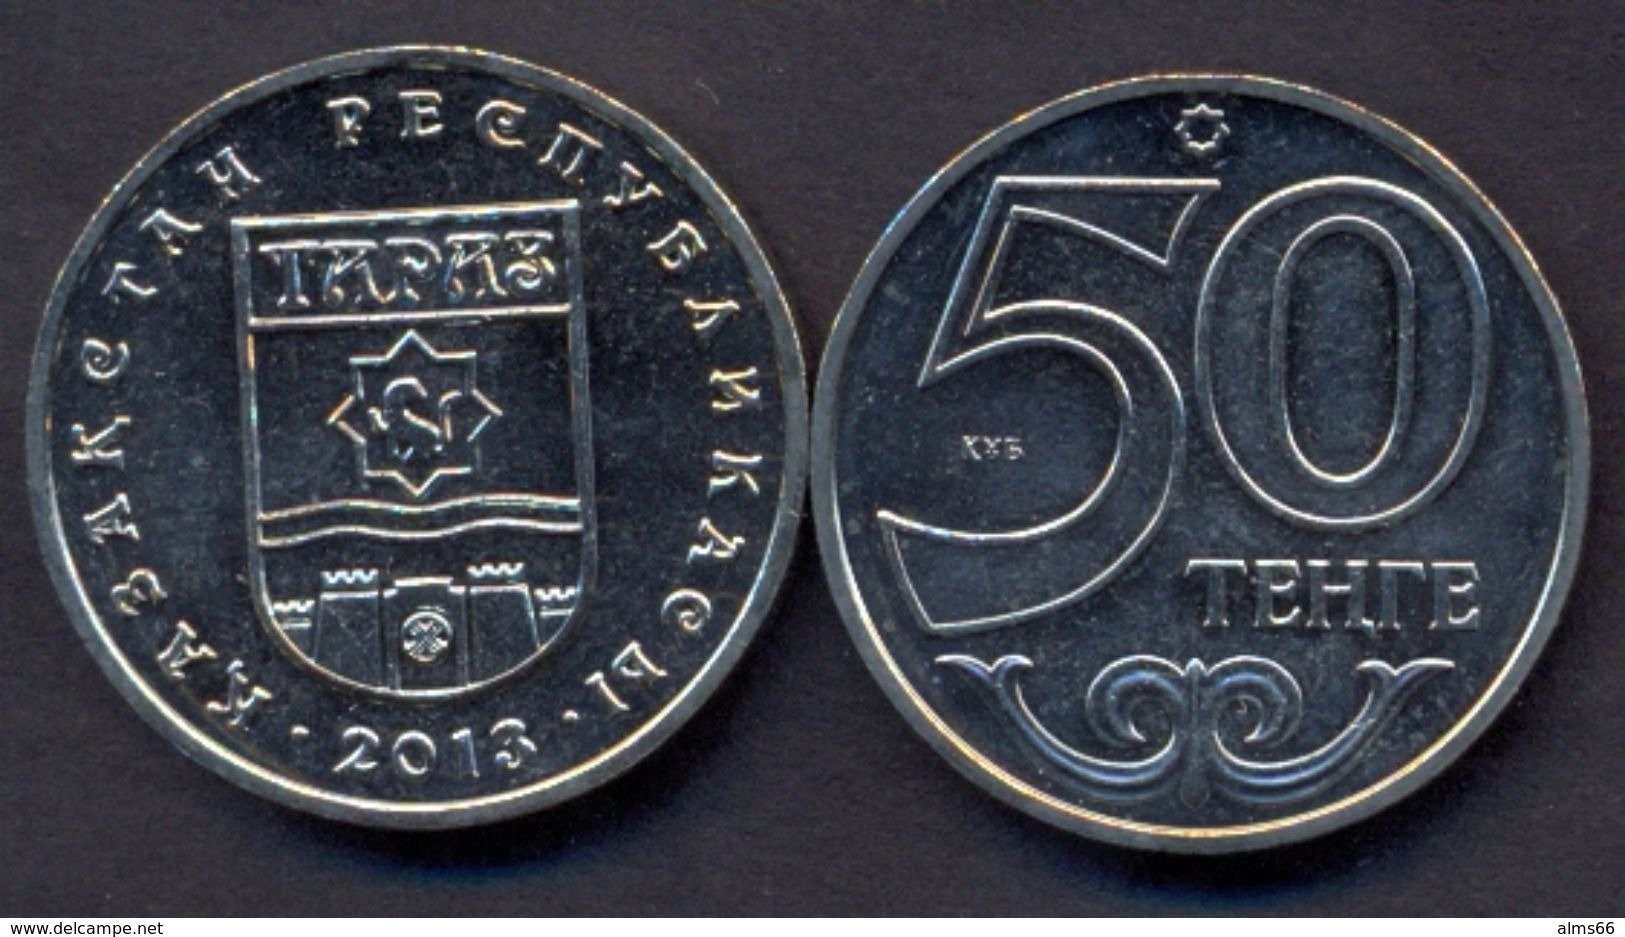 Kazakhstan 50 Tenge 2013 UNC < City TARAZ > Commemorative Coin - Kazakhstan